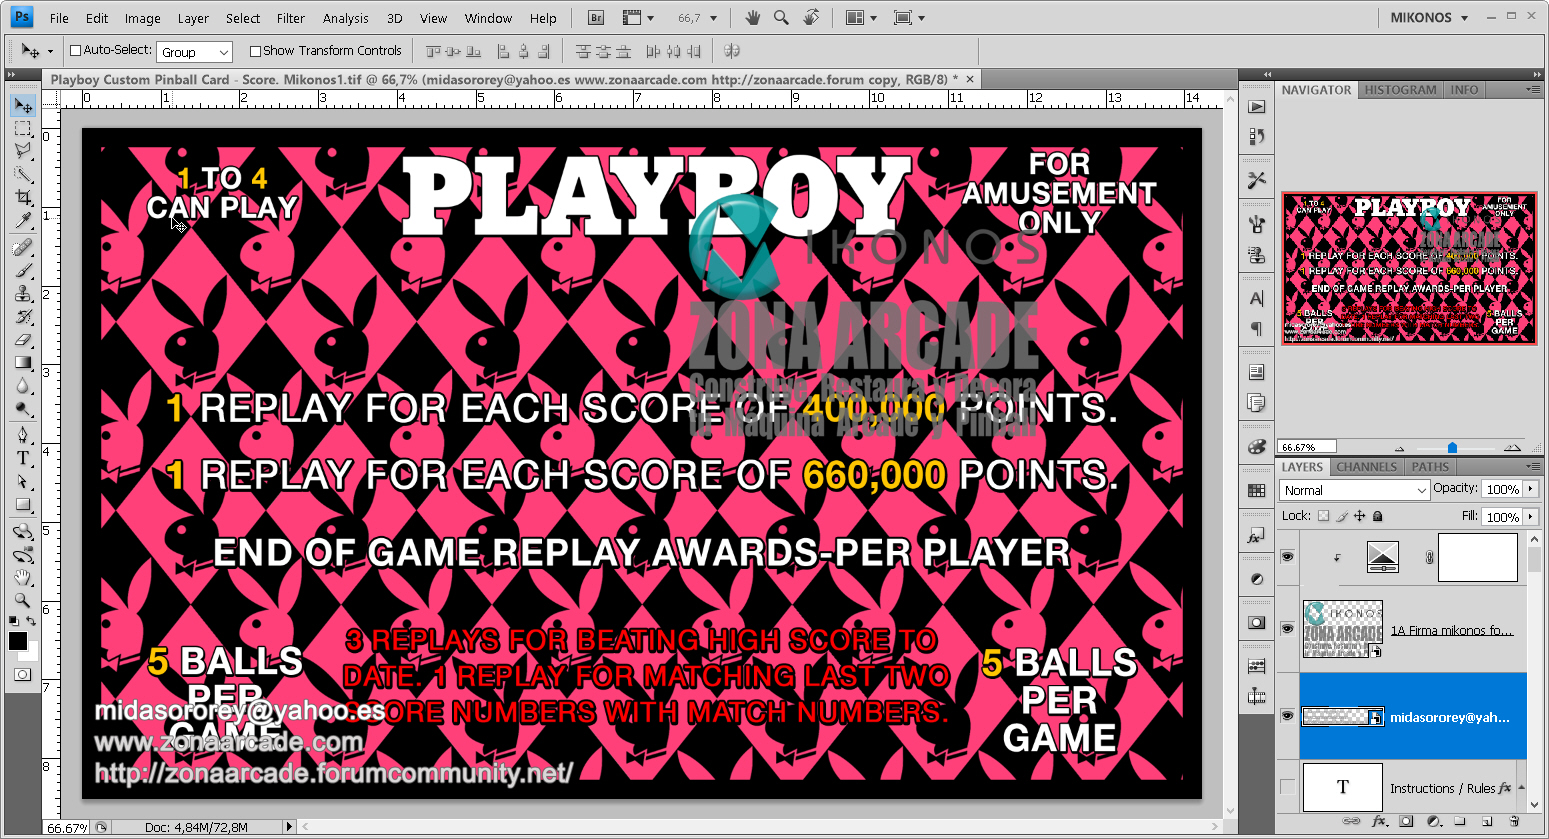 Playboy Custom Pinball Card - Score. Mikonos1